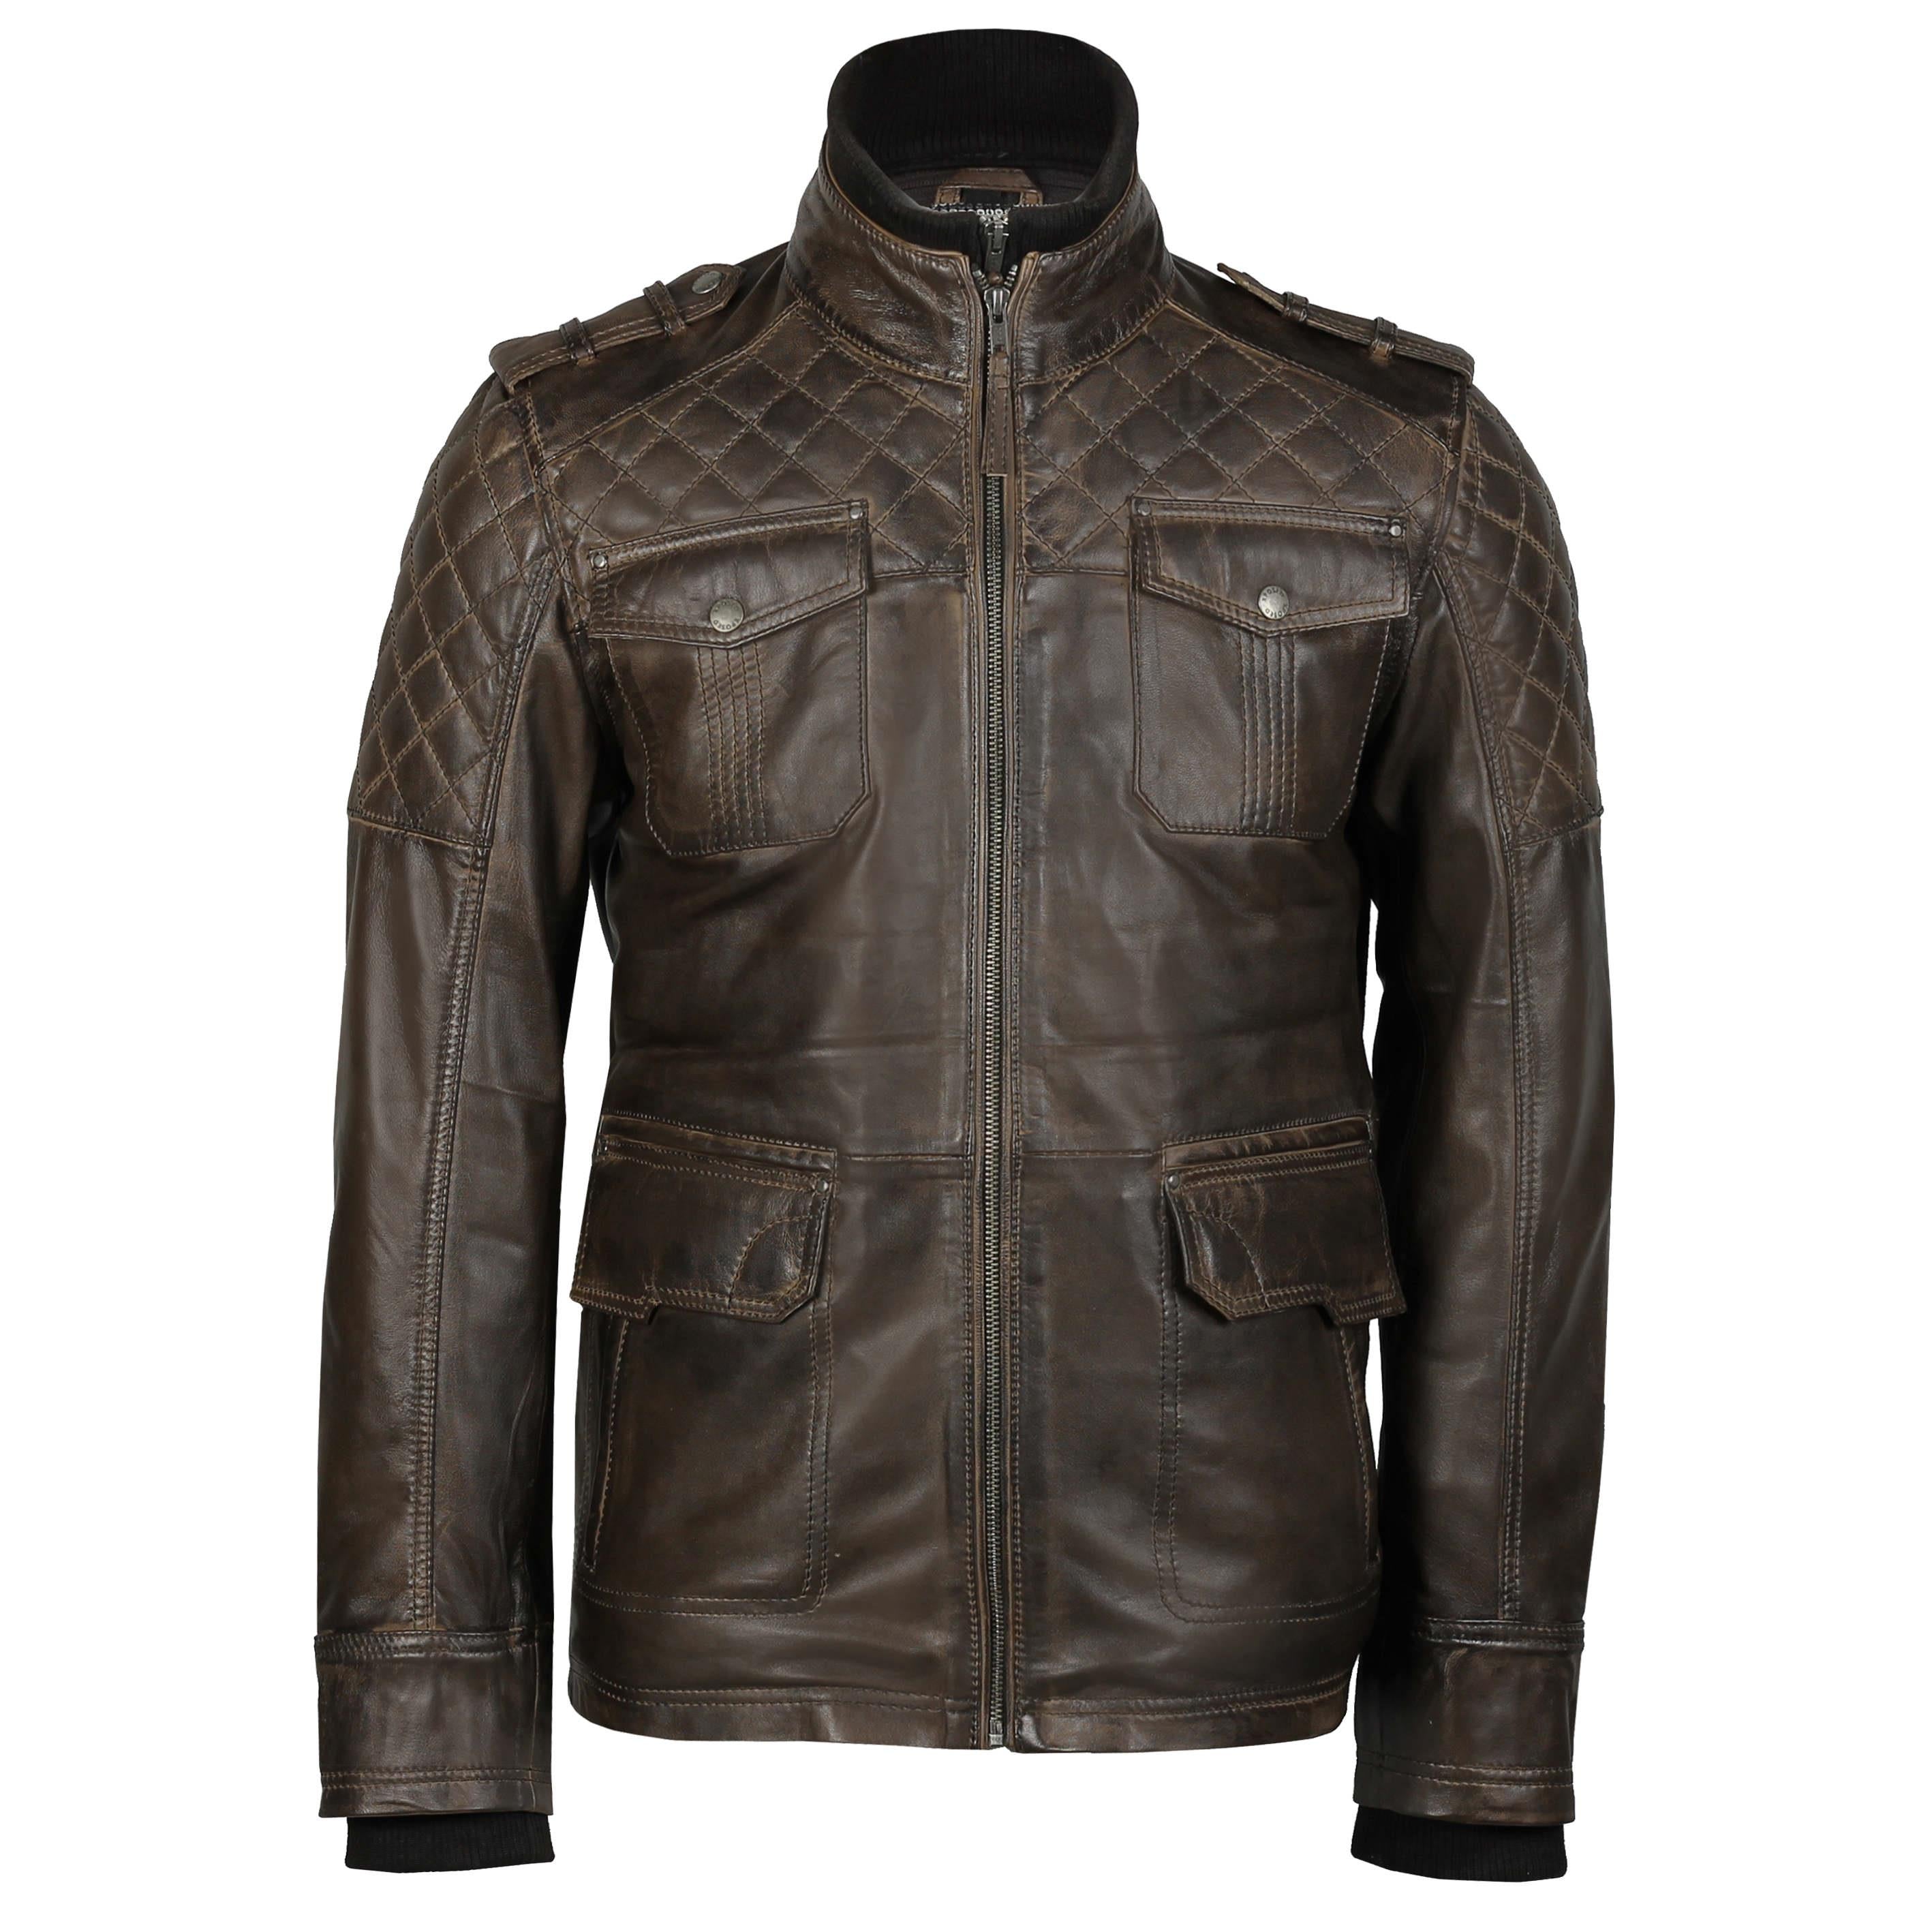 Fashion Leather Jackets | Finest Quality of Jackets - 3AMOTO